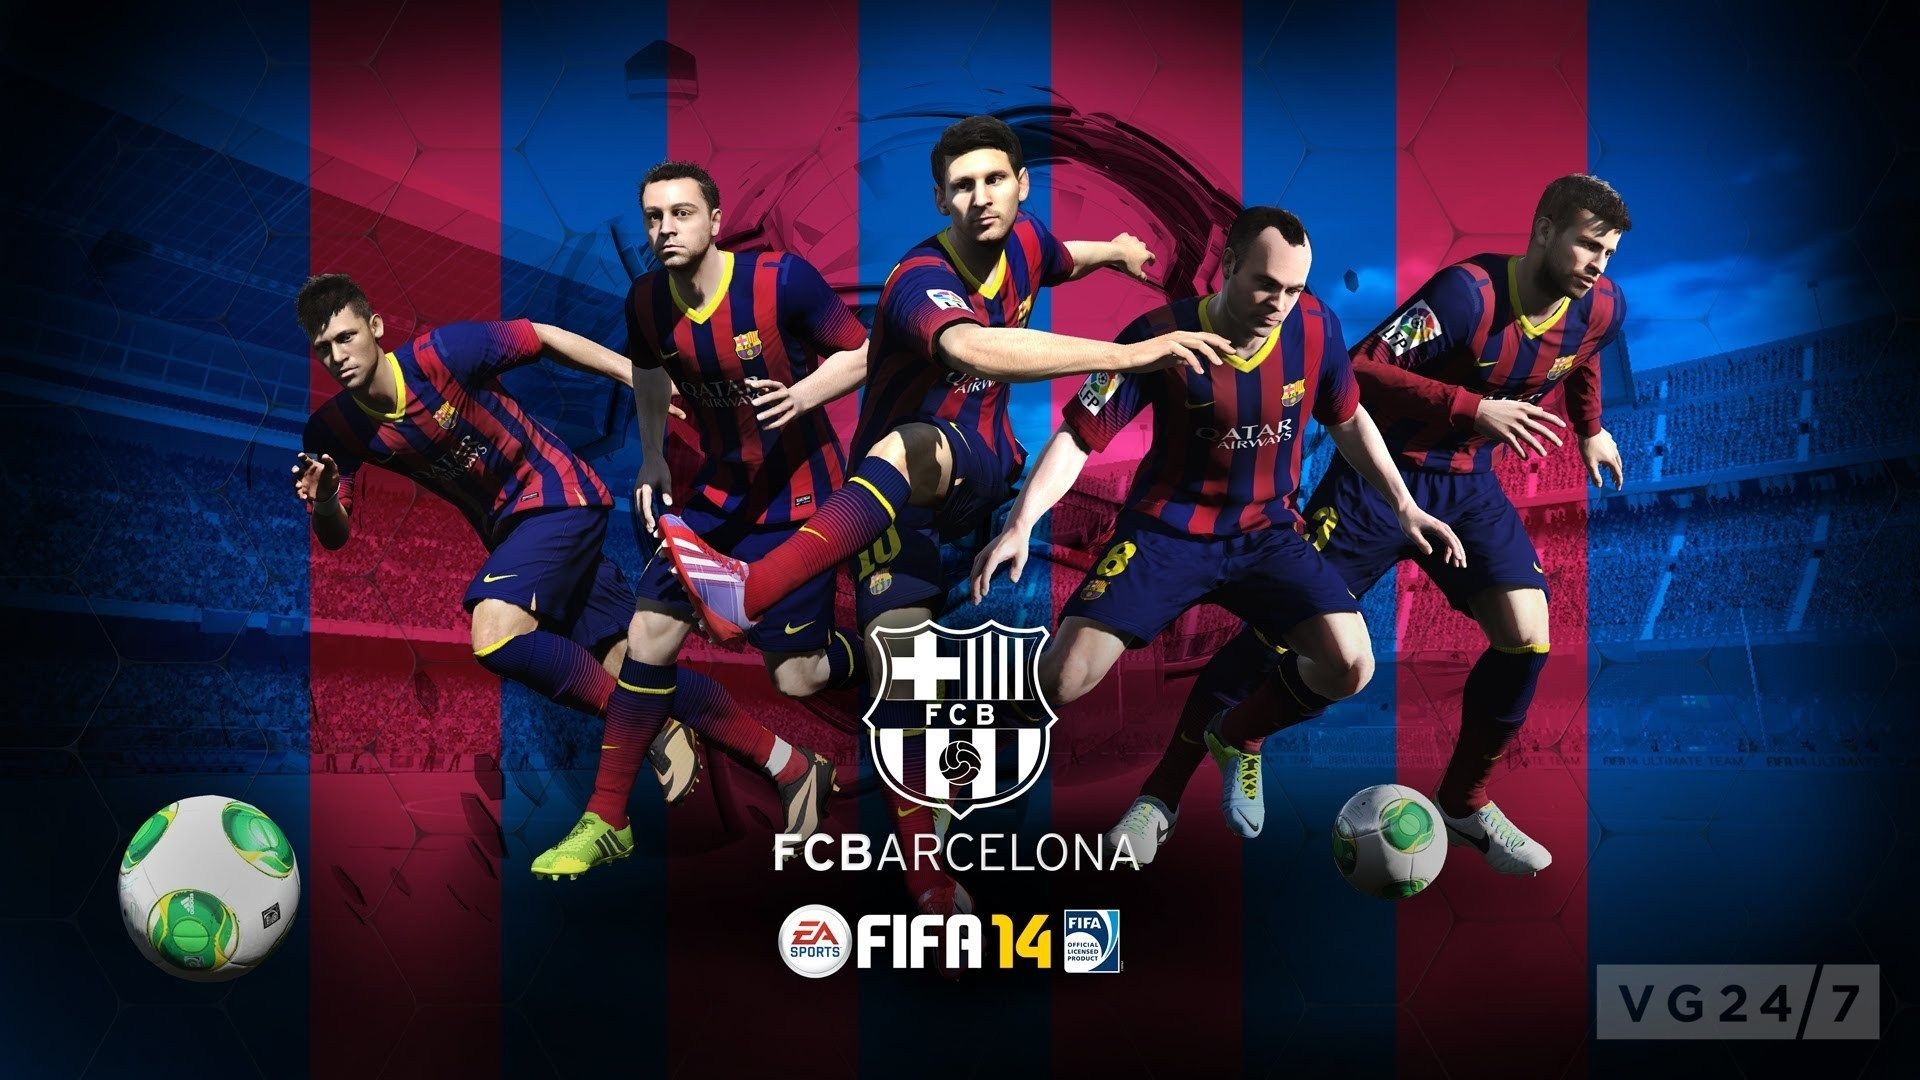 1920x1080 FC Barcelona FIFA football games wallpaper backgrounds - Football .